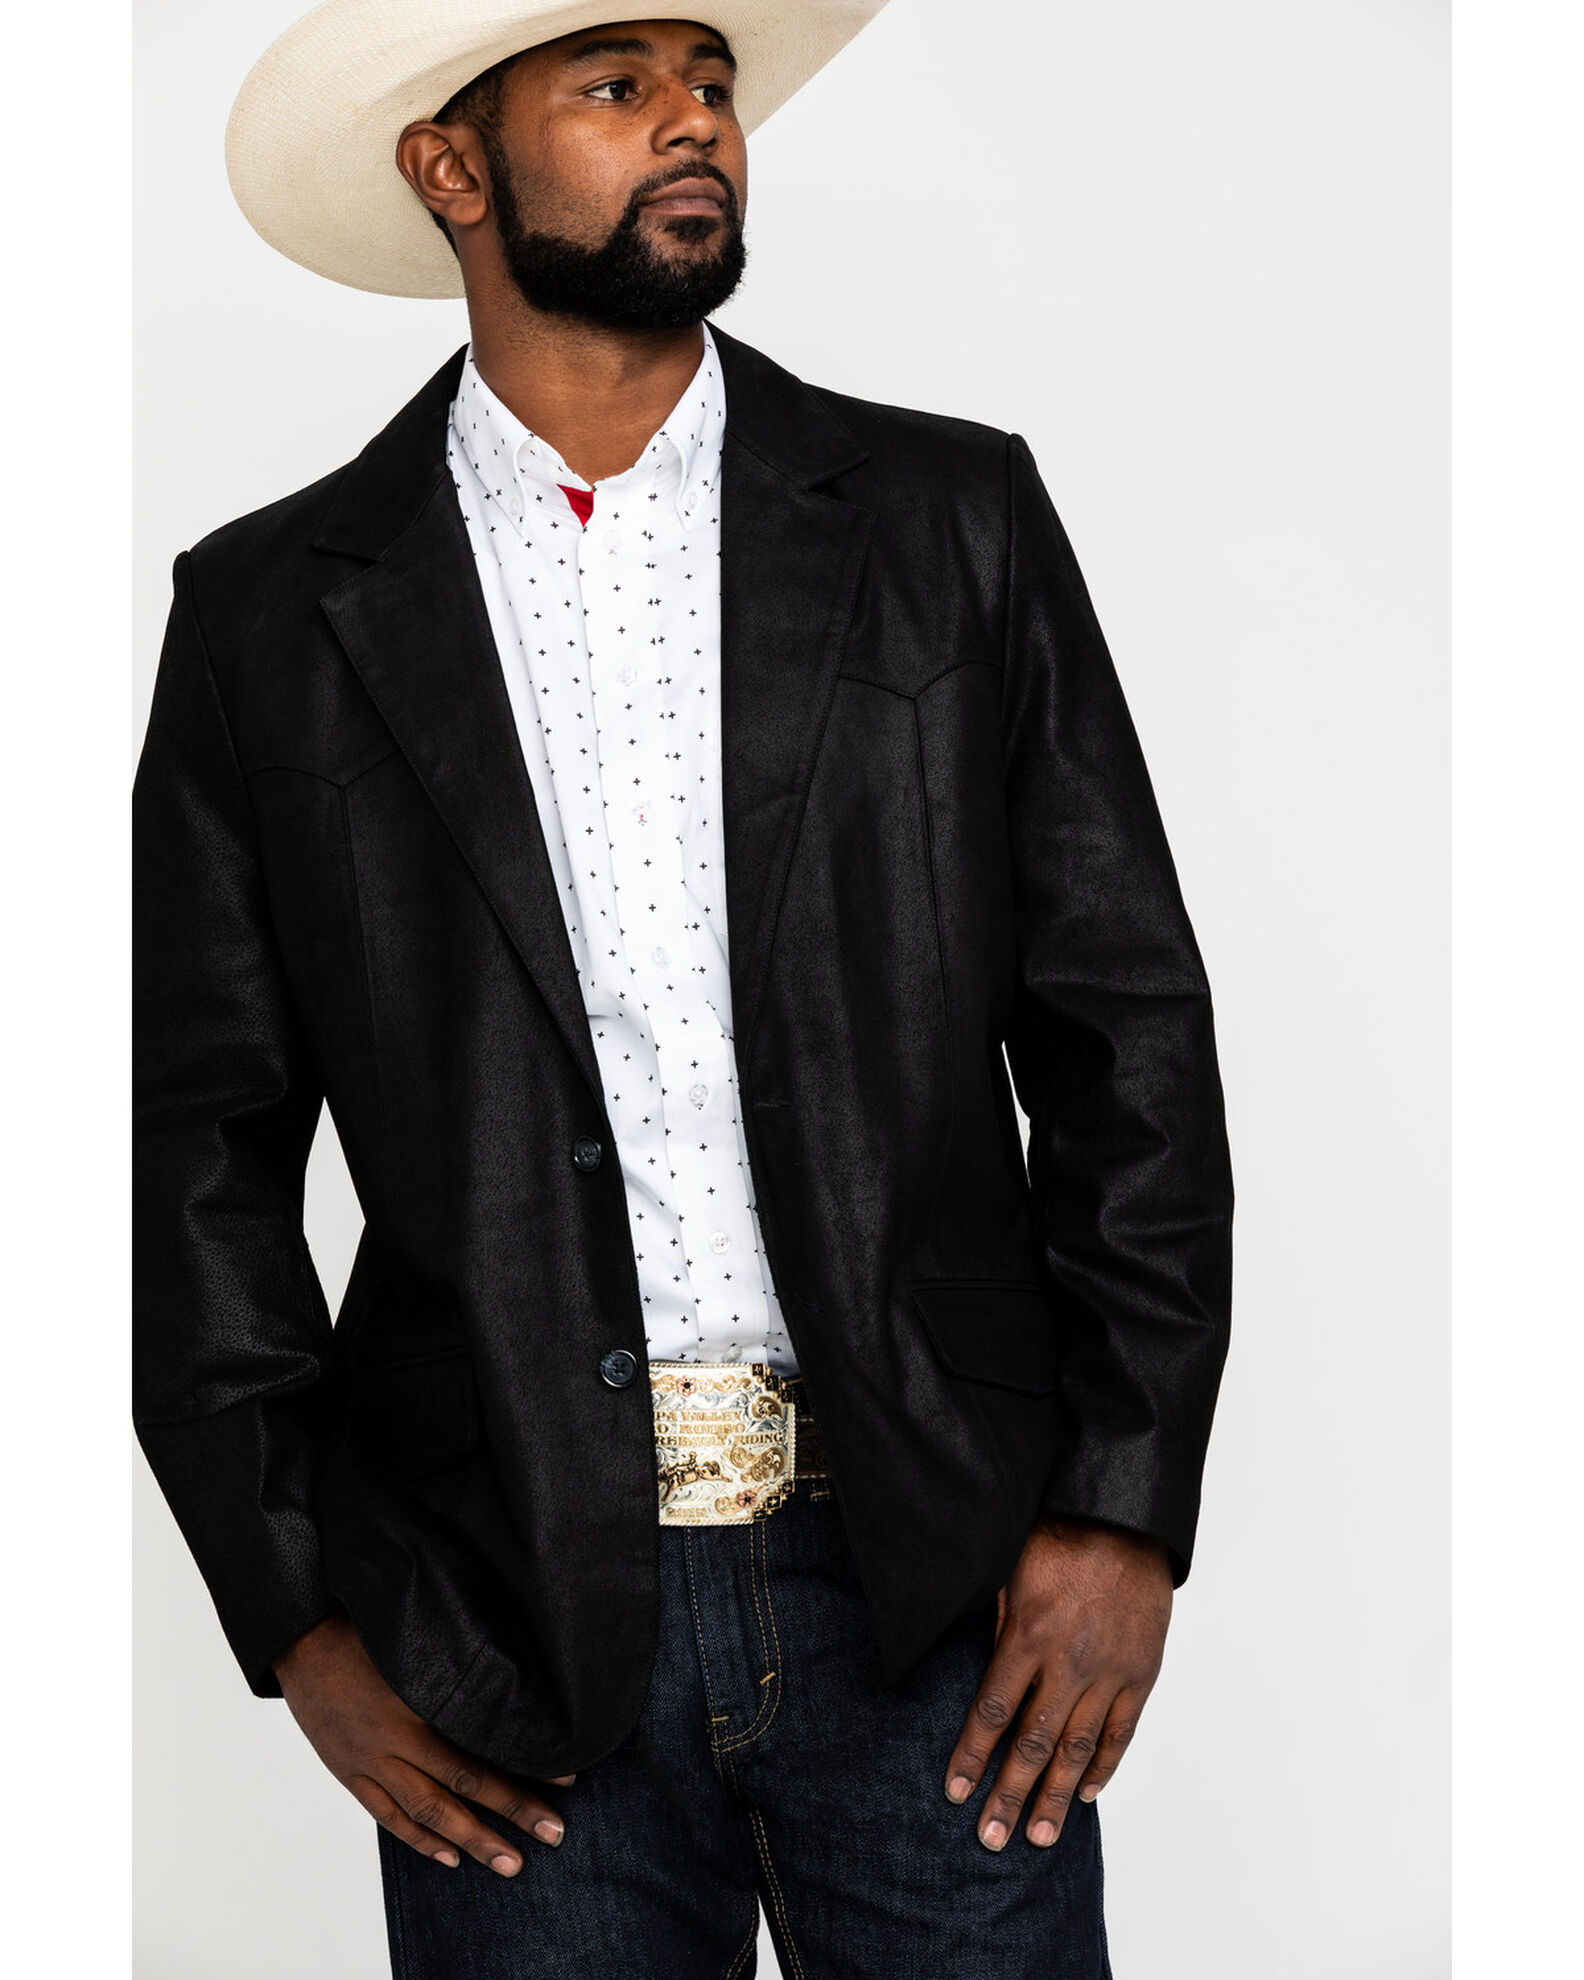 Viskeus idee Of Cody James Men's Black Suede Blazer Jacket - Big & Tall | Boot Barn